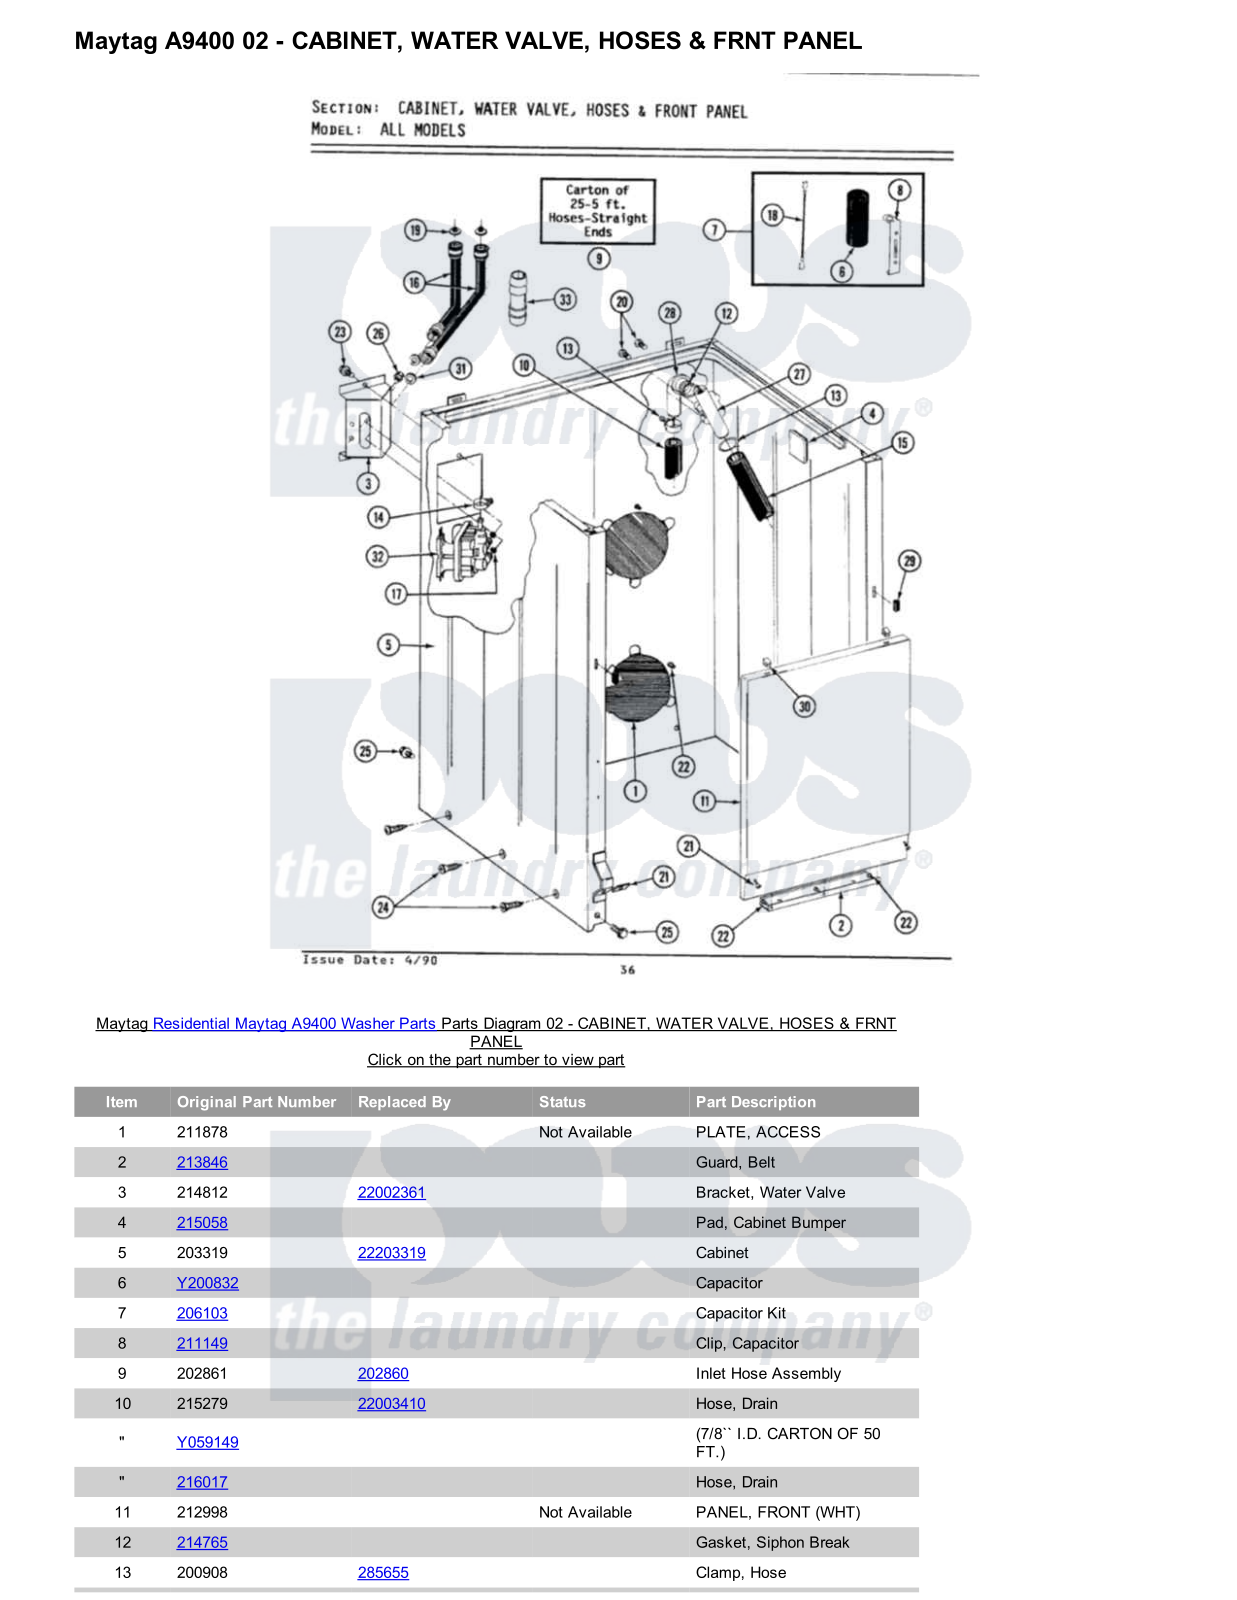 Maytag A9400 Parts Diagram